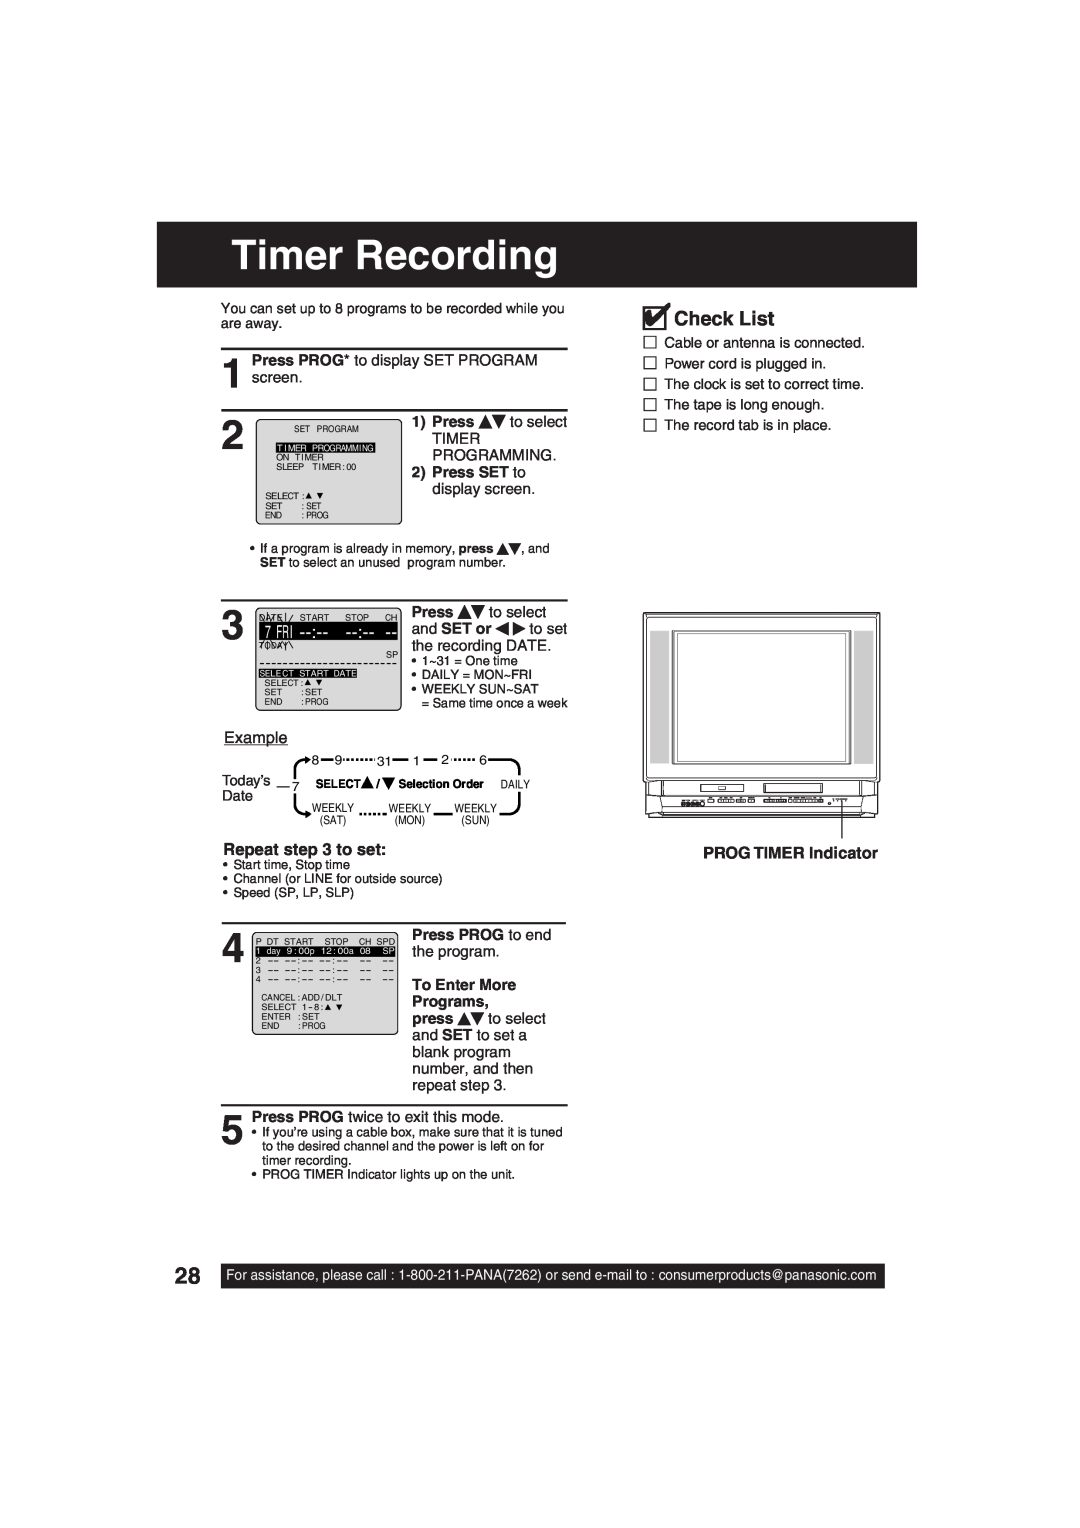 Panasonic PV-DF203, PV-DF273 Timer Recording, Example, Repeat to set, PROG TIMER Indicator, Check List, Press SET to 